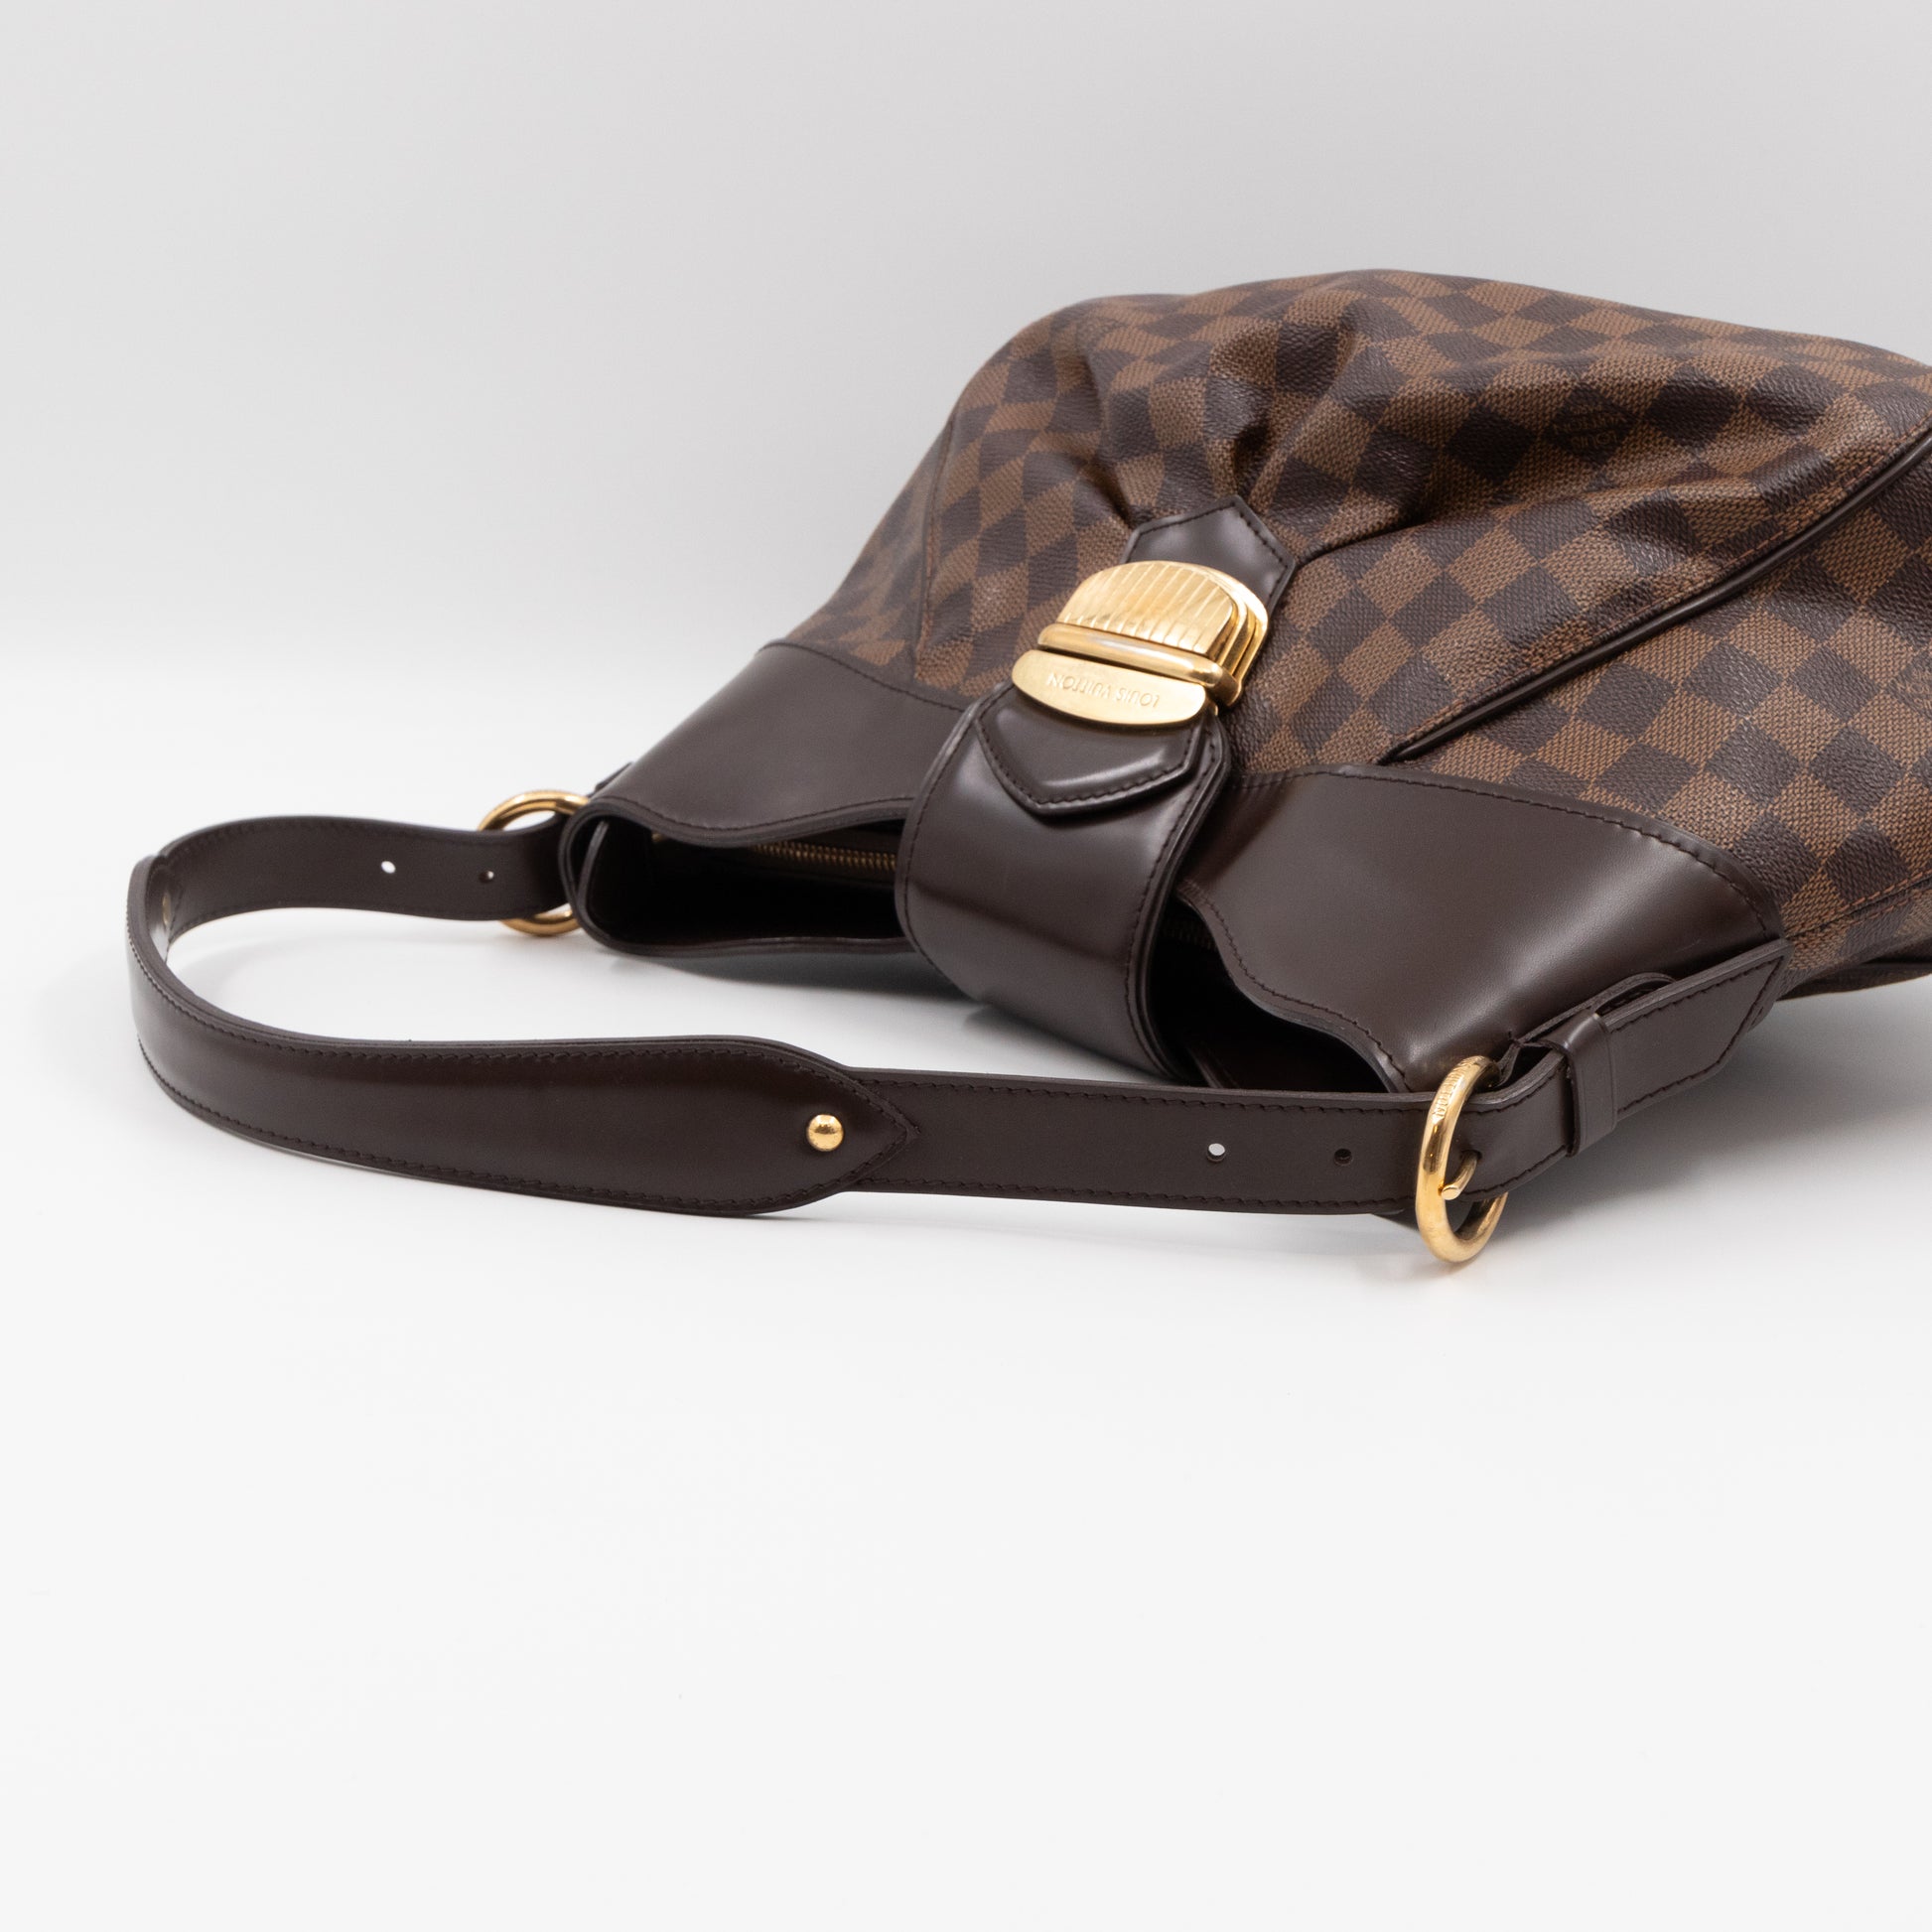 NTWRK - PRELOVED Louis Vuitton Sistina PM Damier Ebene Handbag FL3059 06